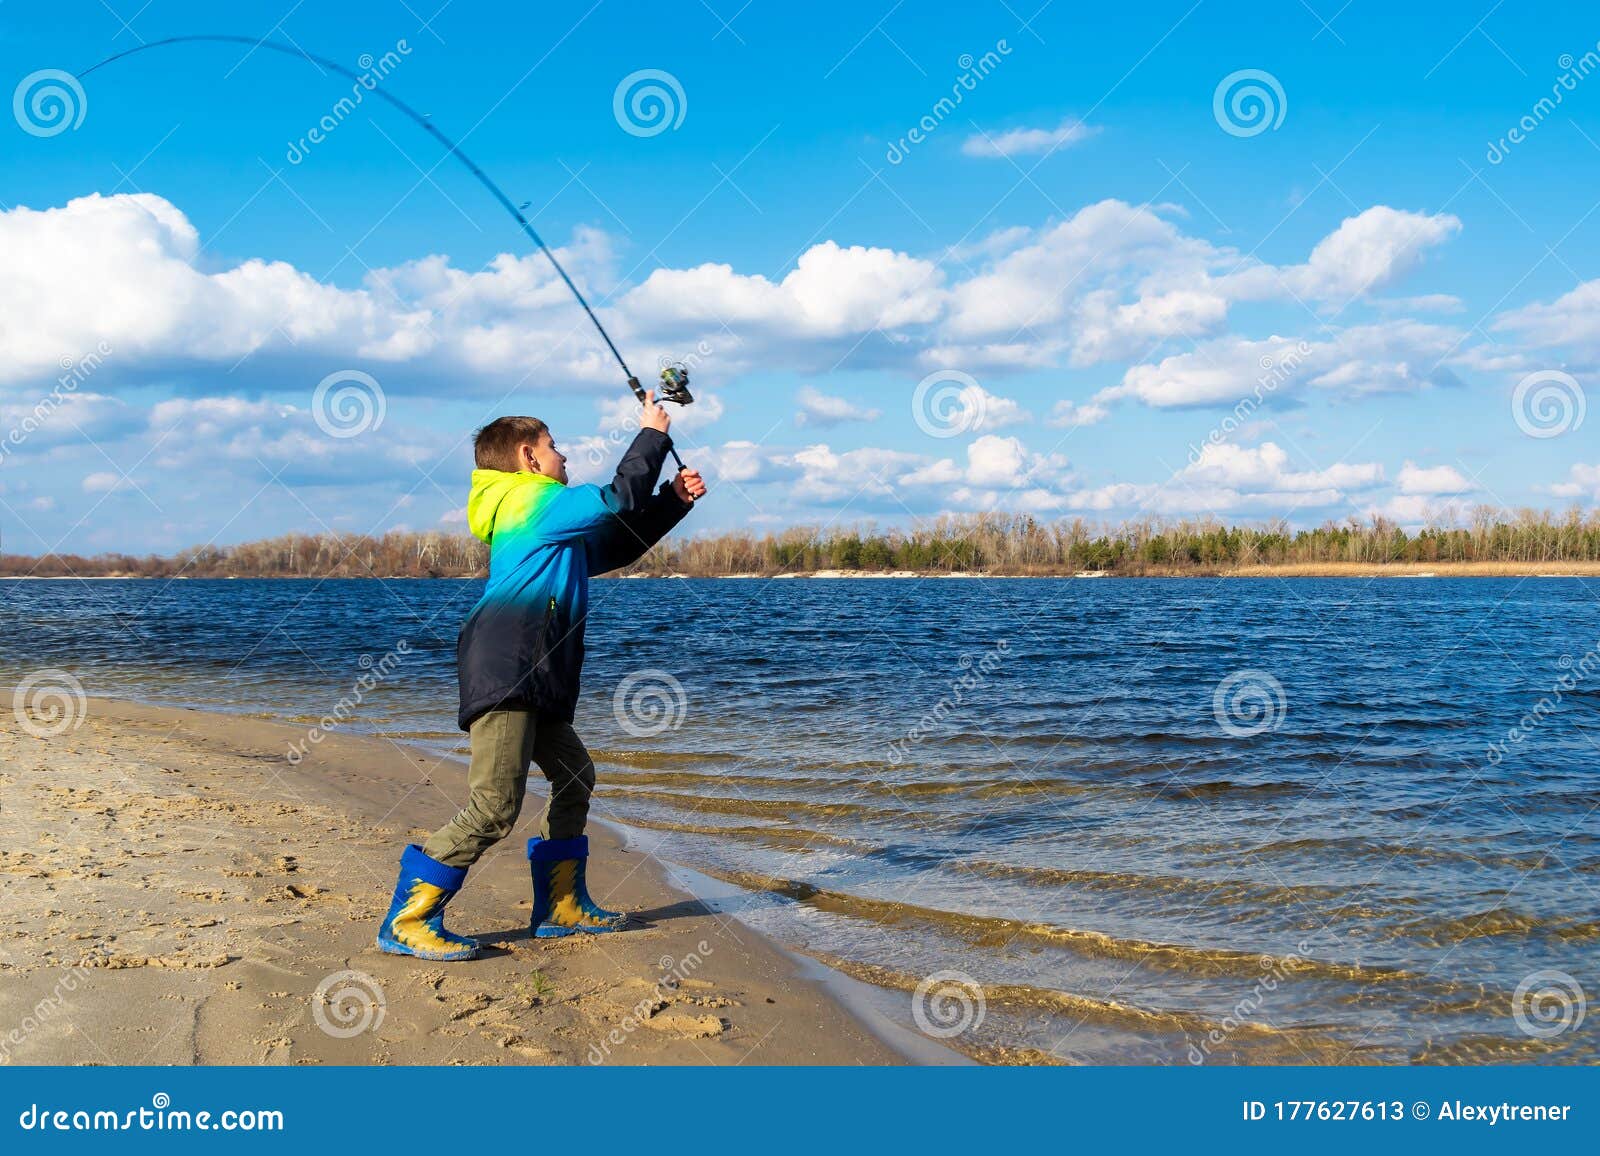 https://thumbs.dreamstime.com/z/teen-boy-catching-fish-fishing-rod-beach-boy-throws-rod-to-river-teen-boy-catching-fish-fishing-rod-beach-177627613.jpg